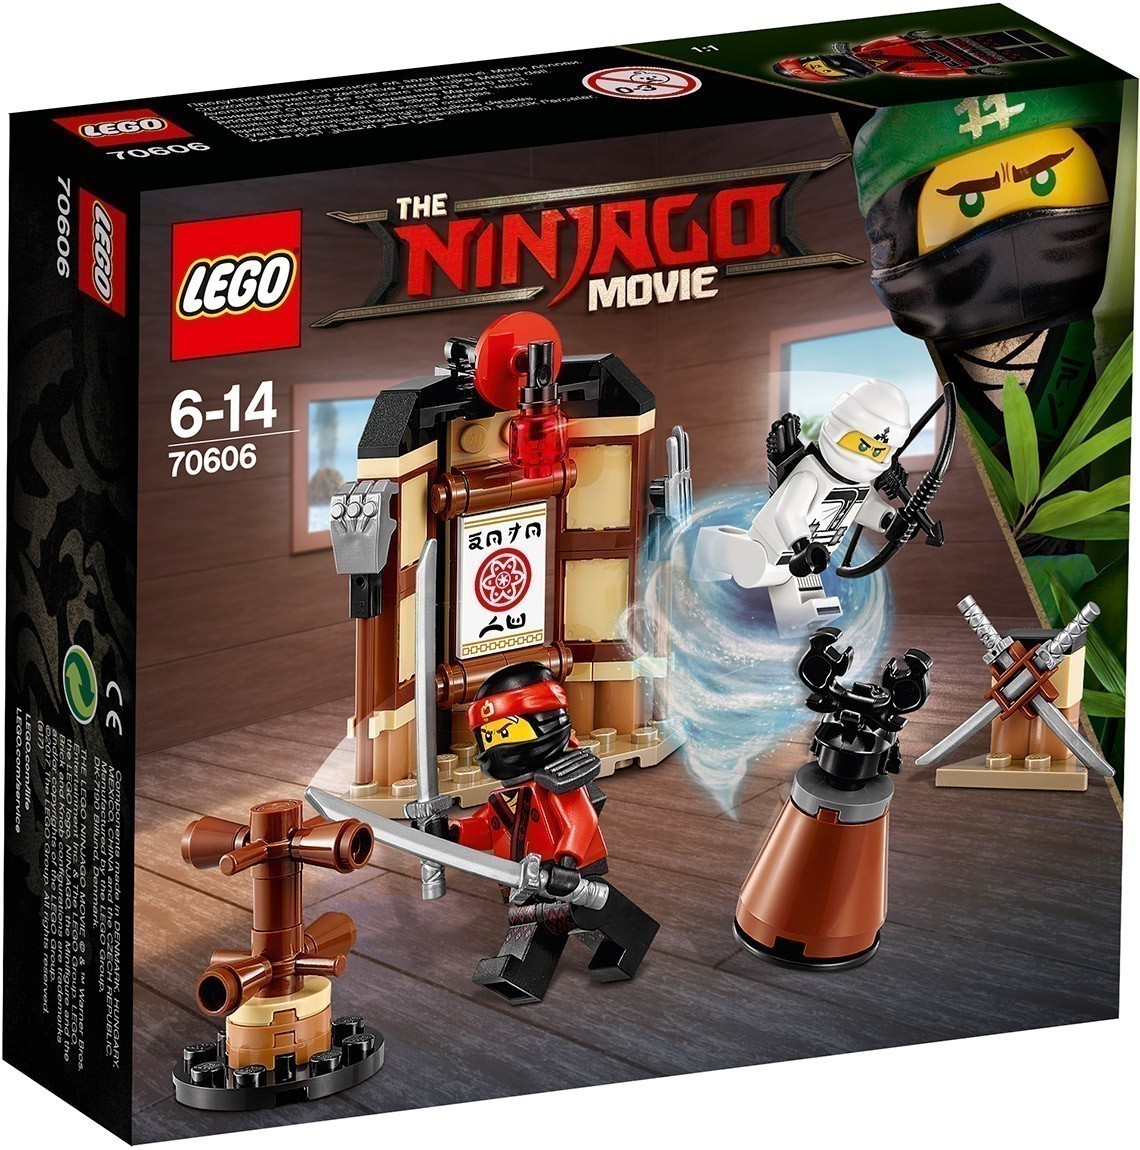 LEGO - The Ninjago Movie 70606 - Spinjitzu Training